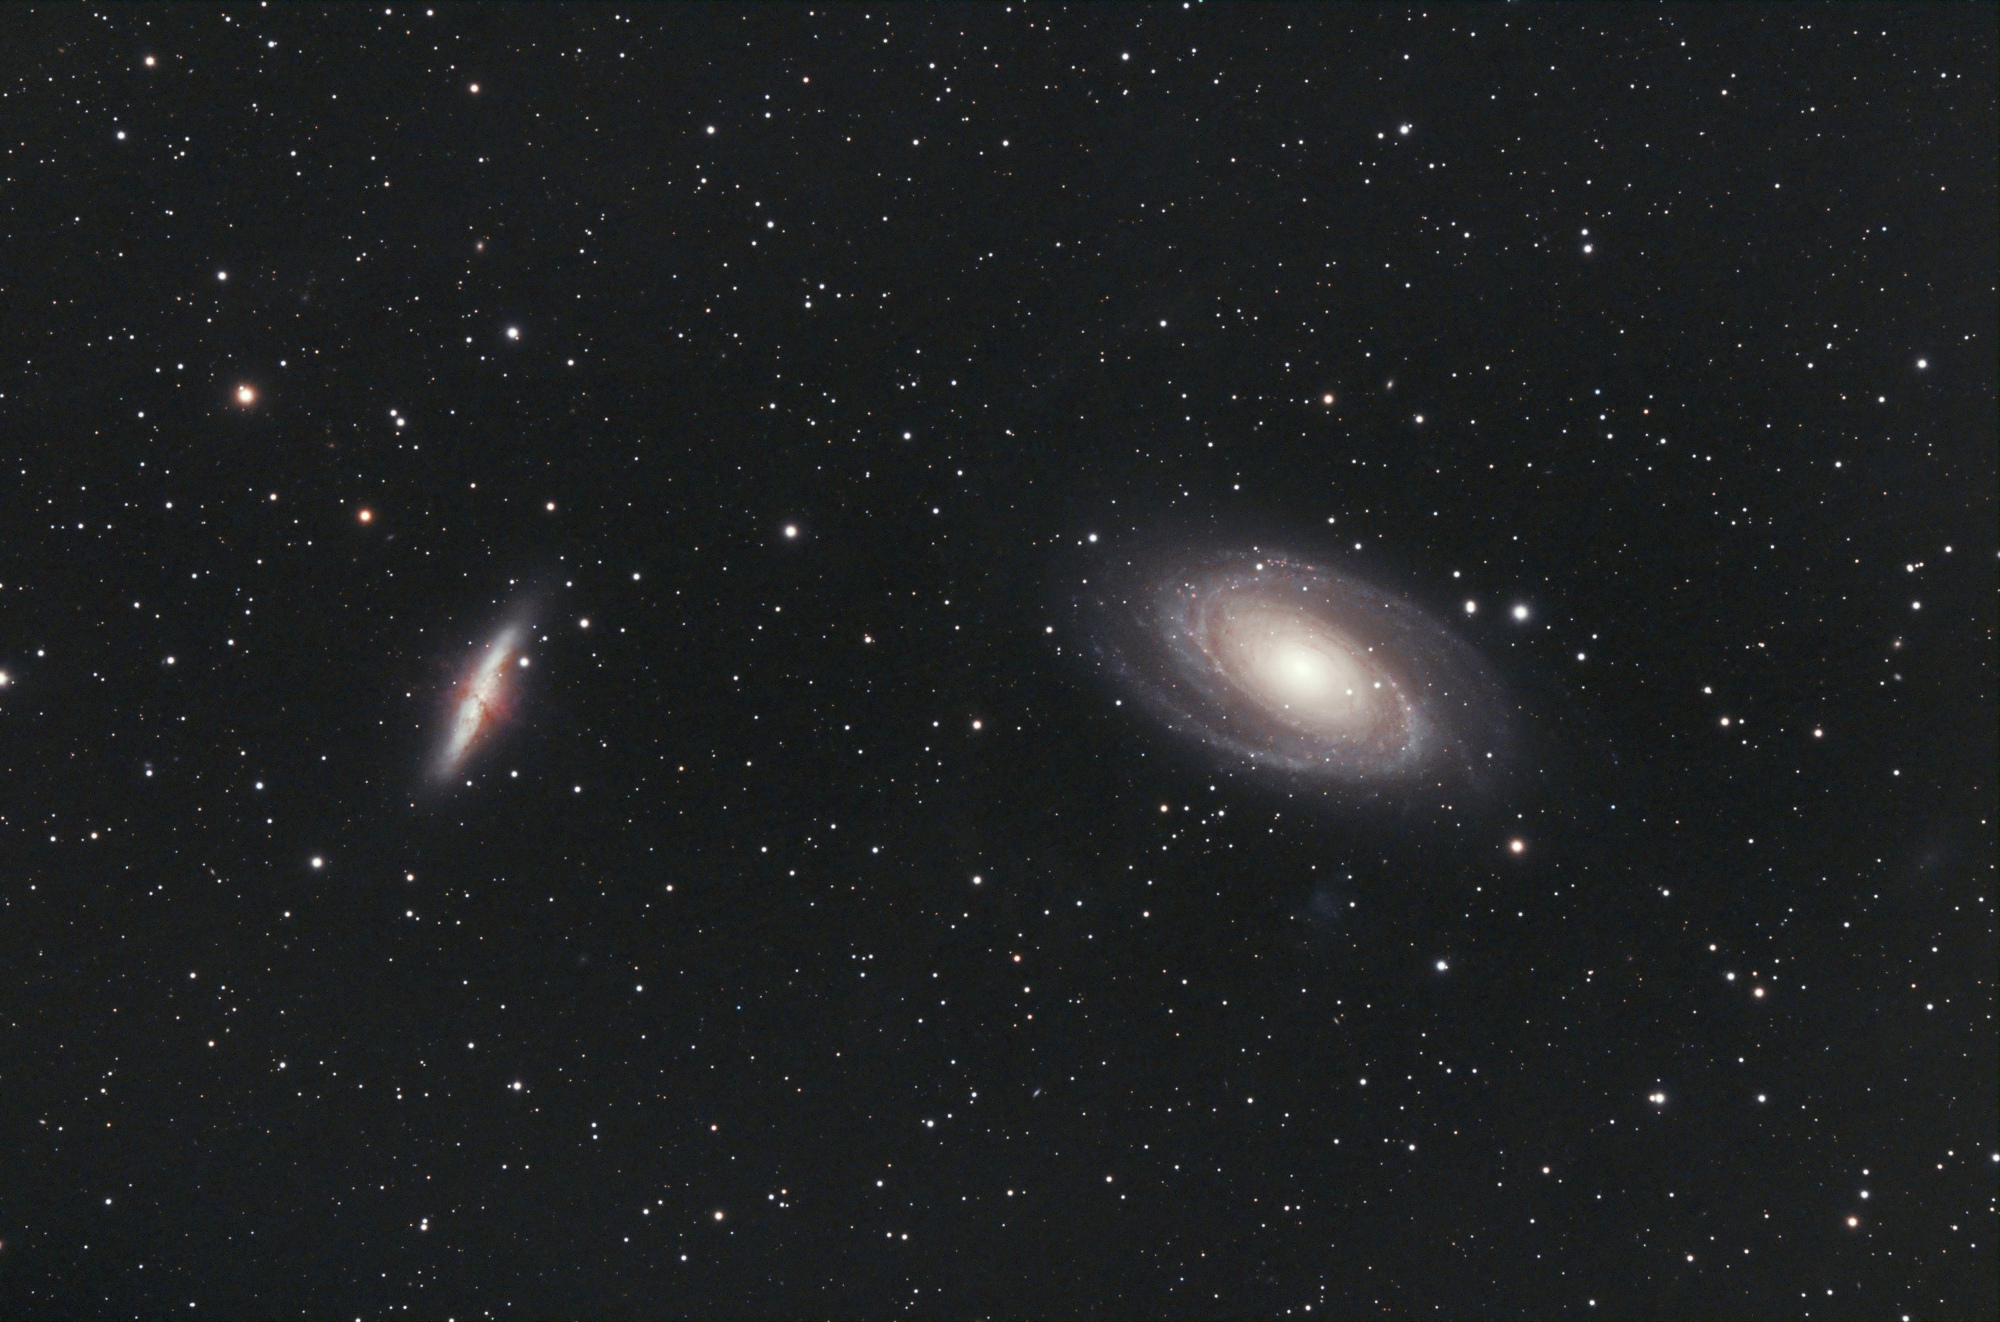 M81_&_M82_SIRIL-1-cs5-4-iris-2-FINAL-4.jpg